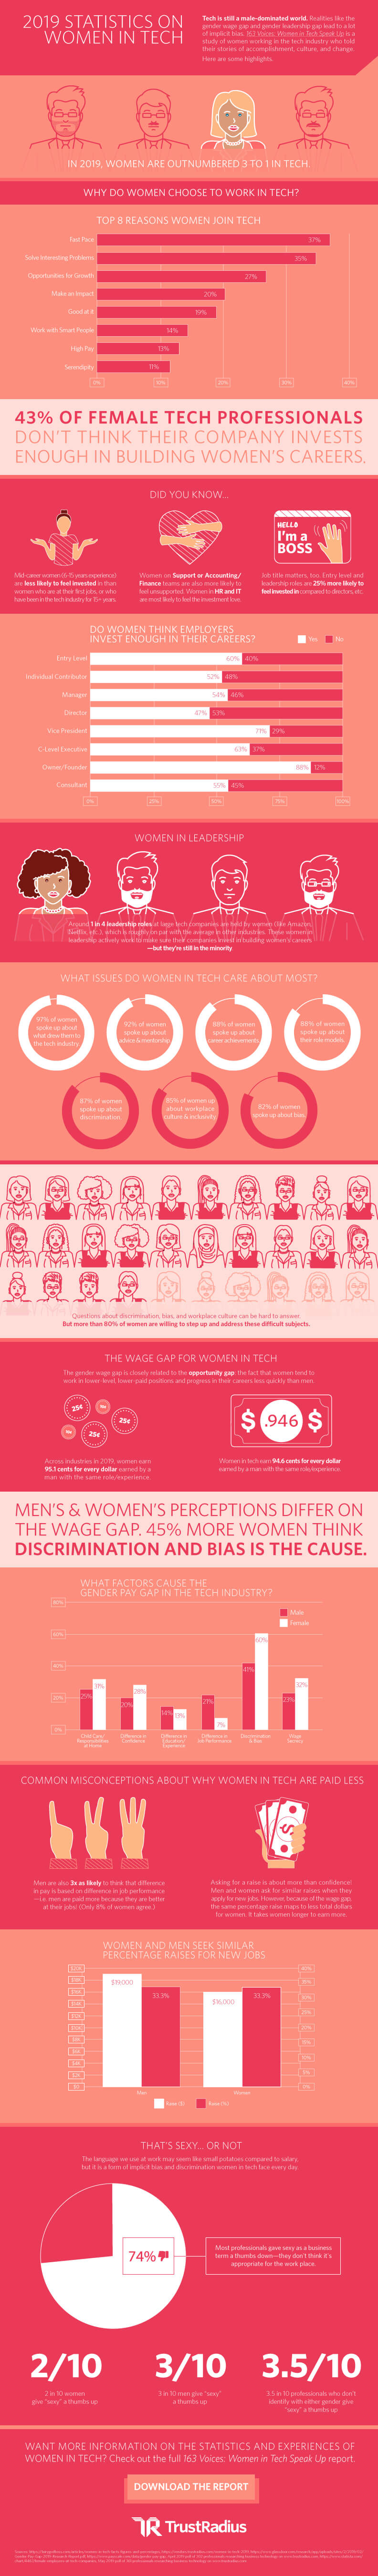 women in tech statistics infographic | trustradius